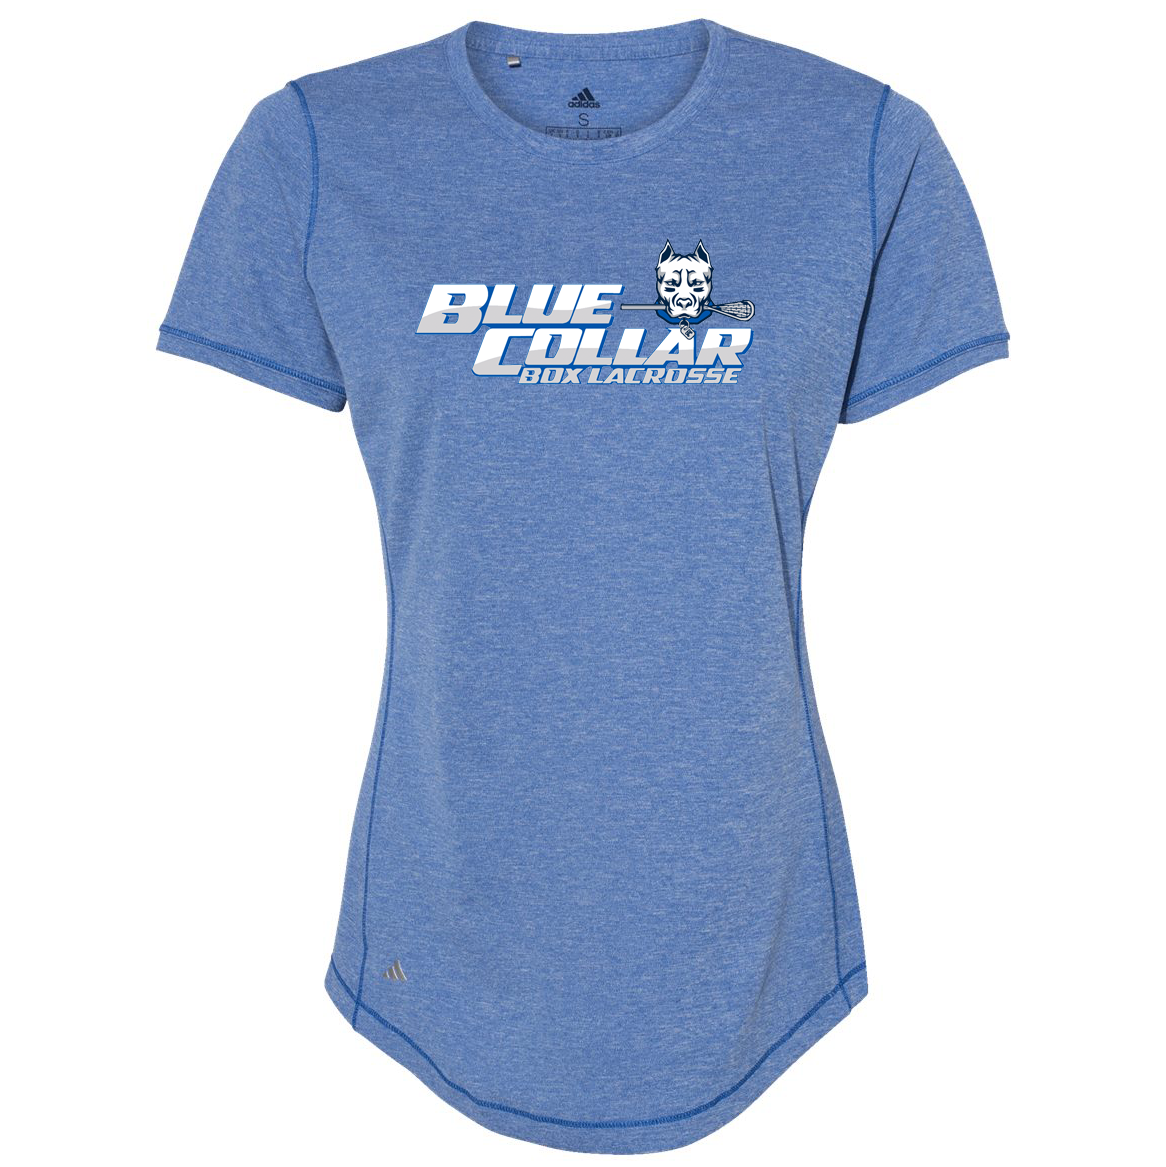 Blue Collar Box Lacrosse Women's Adidas Sport T-Shirt